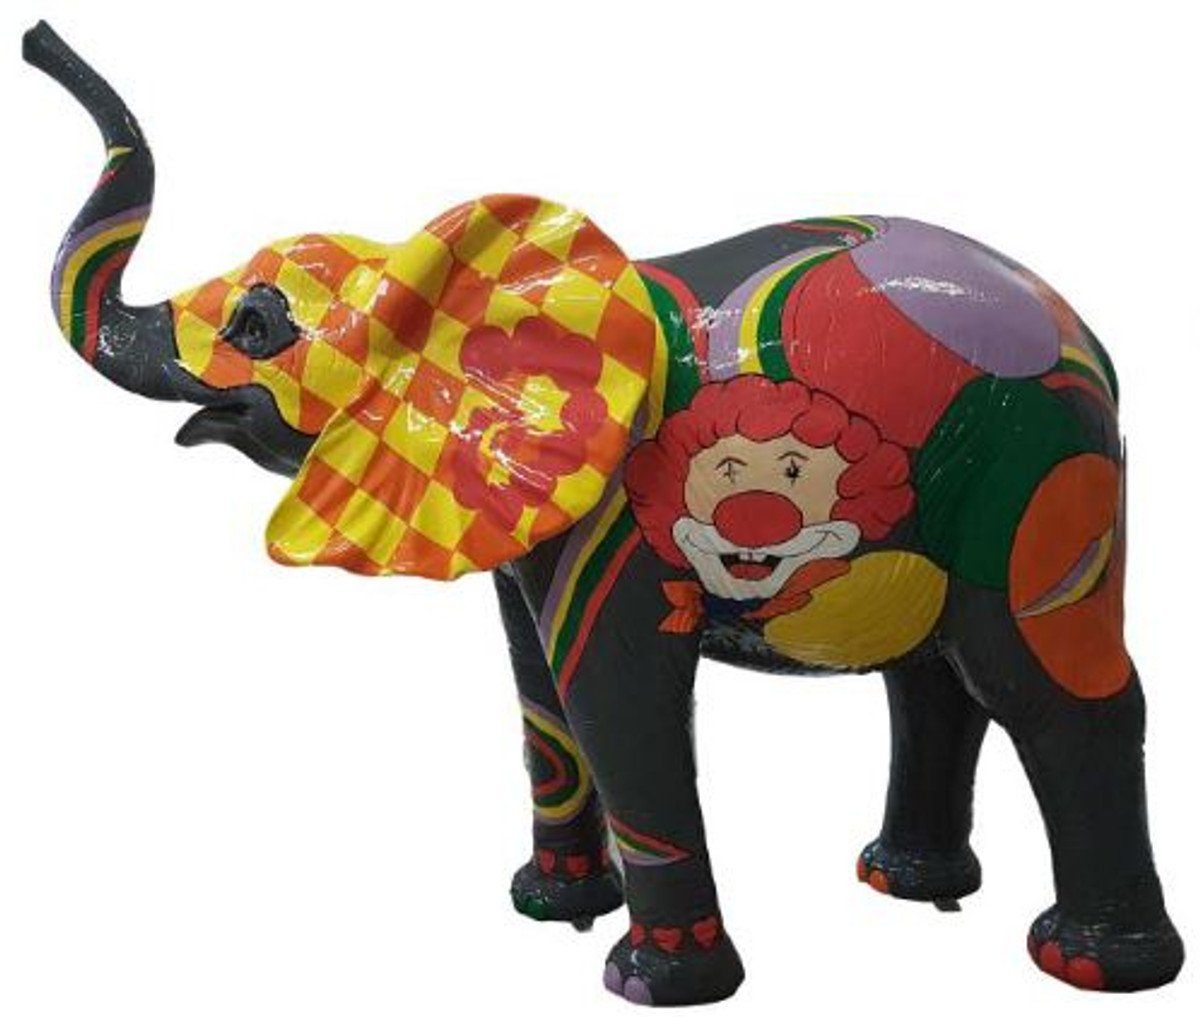 Casa Padrino Skulptur Designer Dekofigur Elefant mit Clown Design Bunt 160 x H. 160 cm - Riesige Deko Skulptur - Wetterbeständige Gartendeko XXL Gartenskulptur